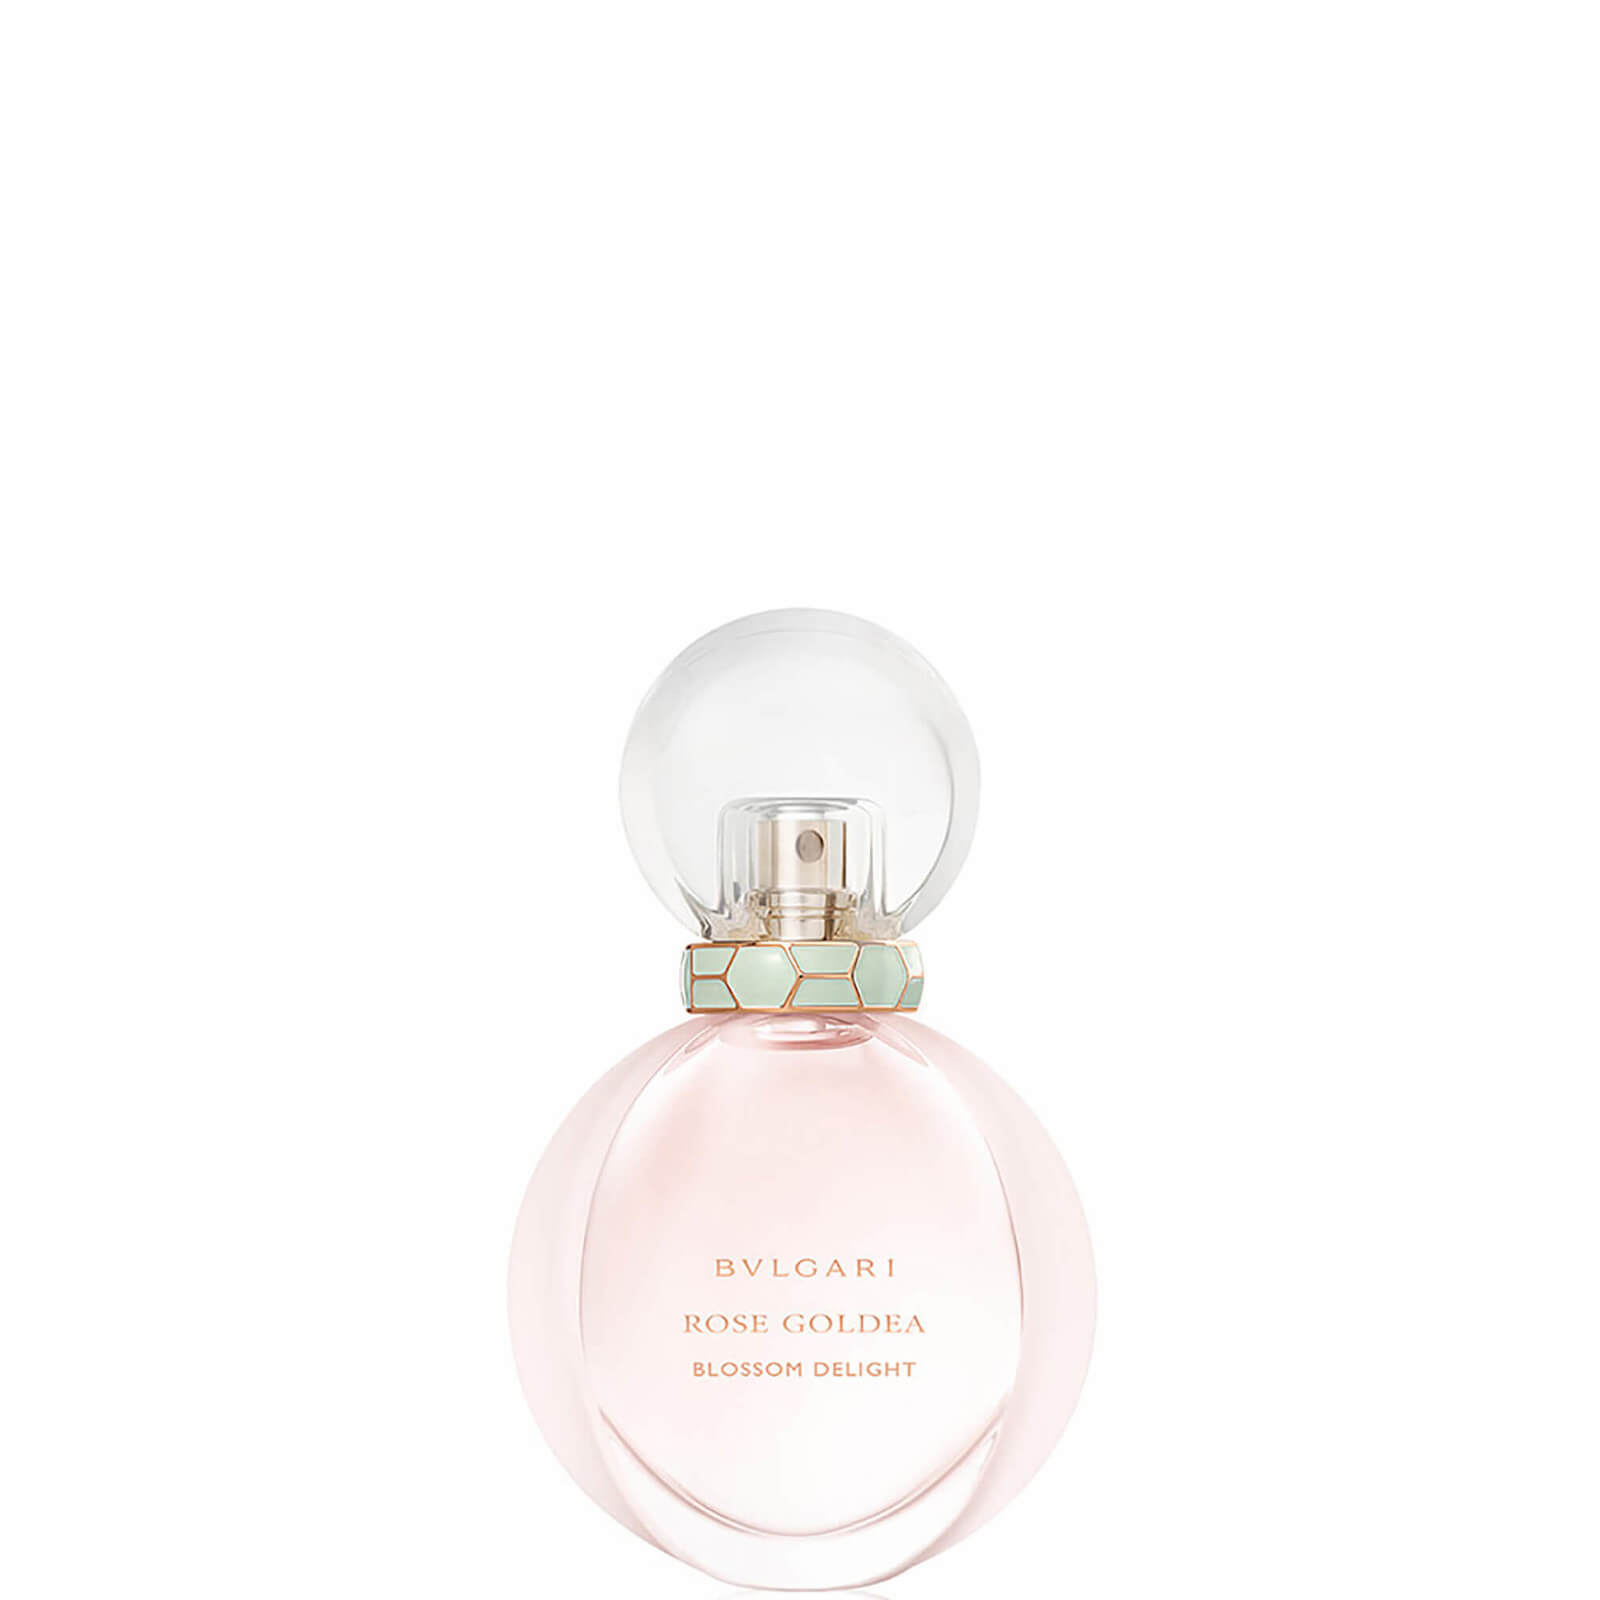 Photos - Women's Fragrance Bvlgari Rose Goldea Blossom Delight Eau De Parfum 30ml 40472 